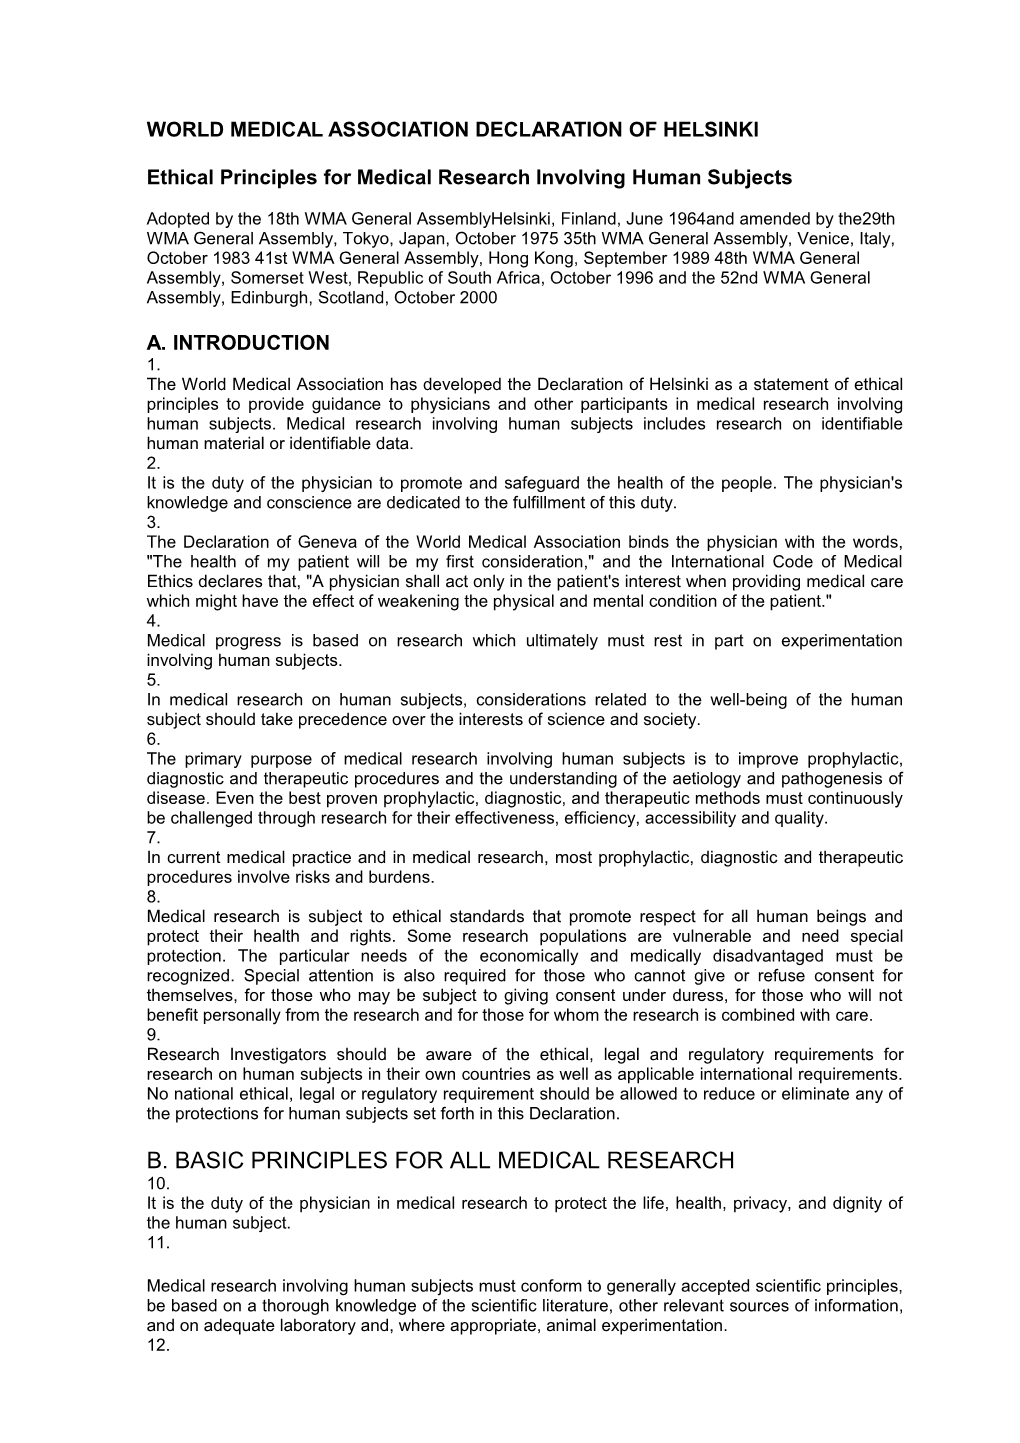 World Medical Association Declaration of Helsinki